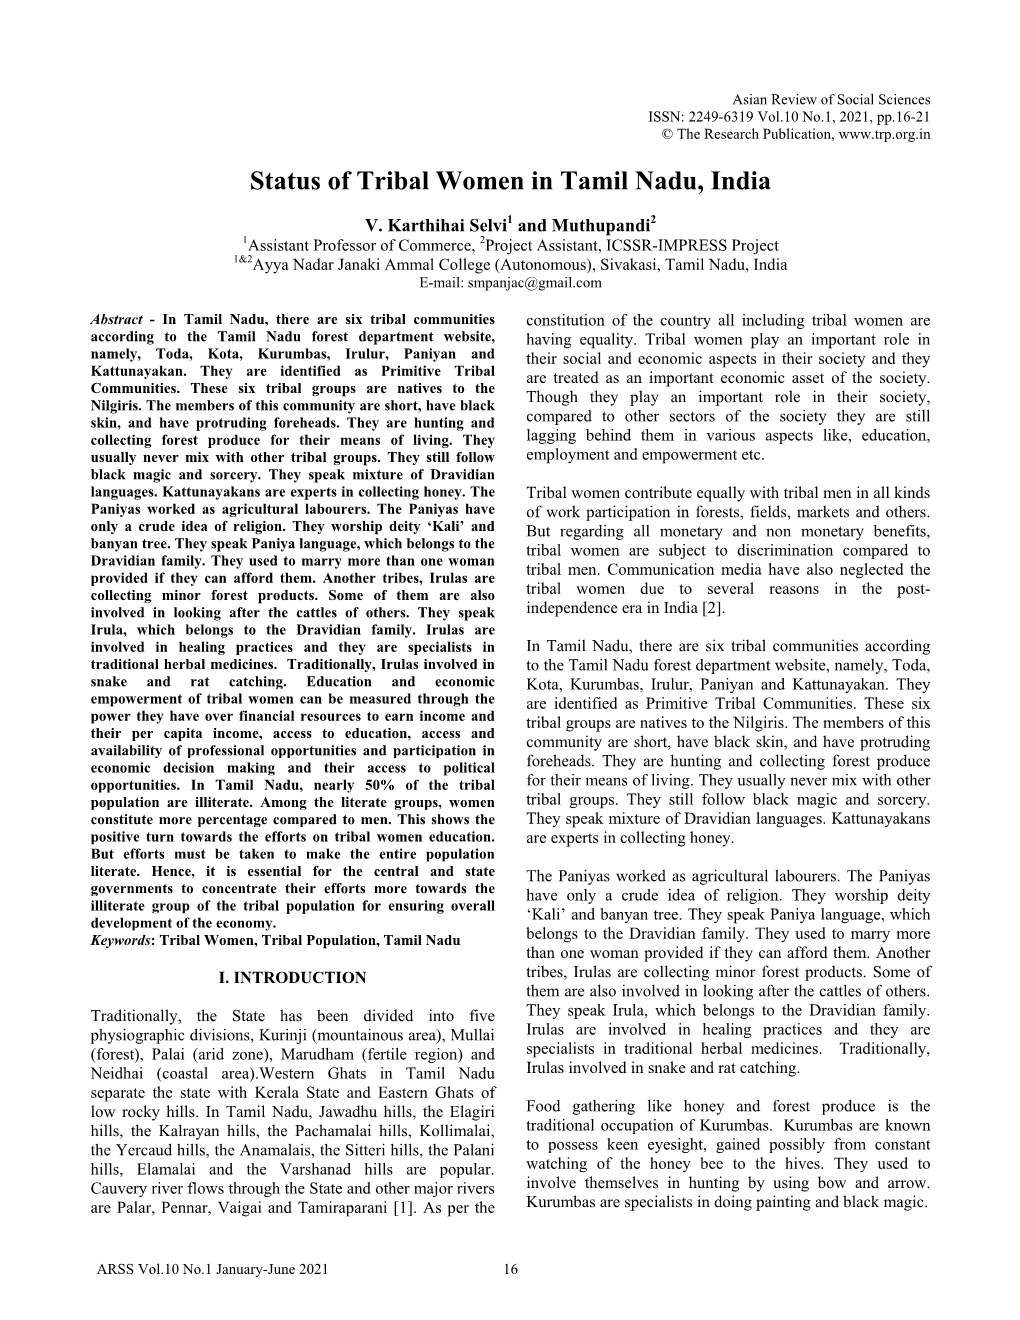 Status of Tribal Women in Tamil Nadu, India